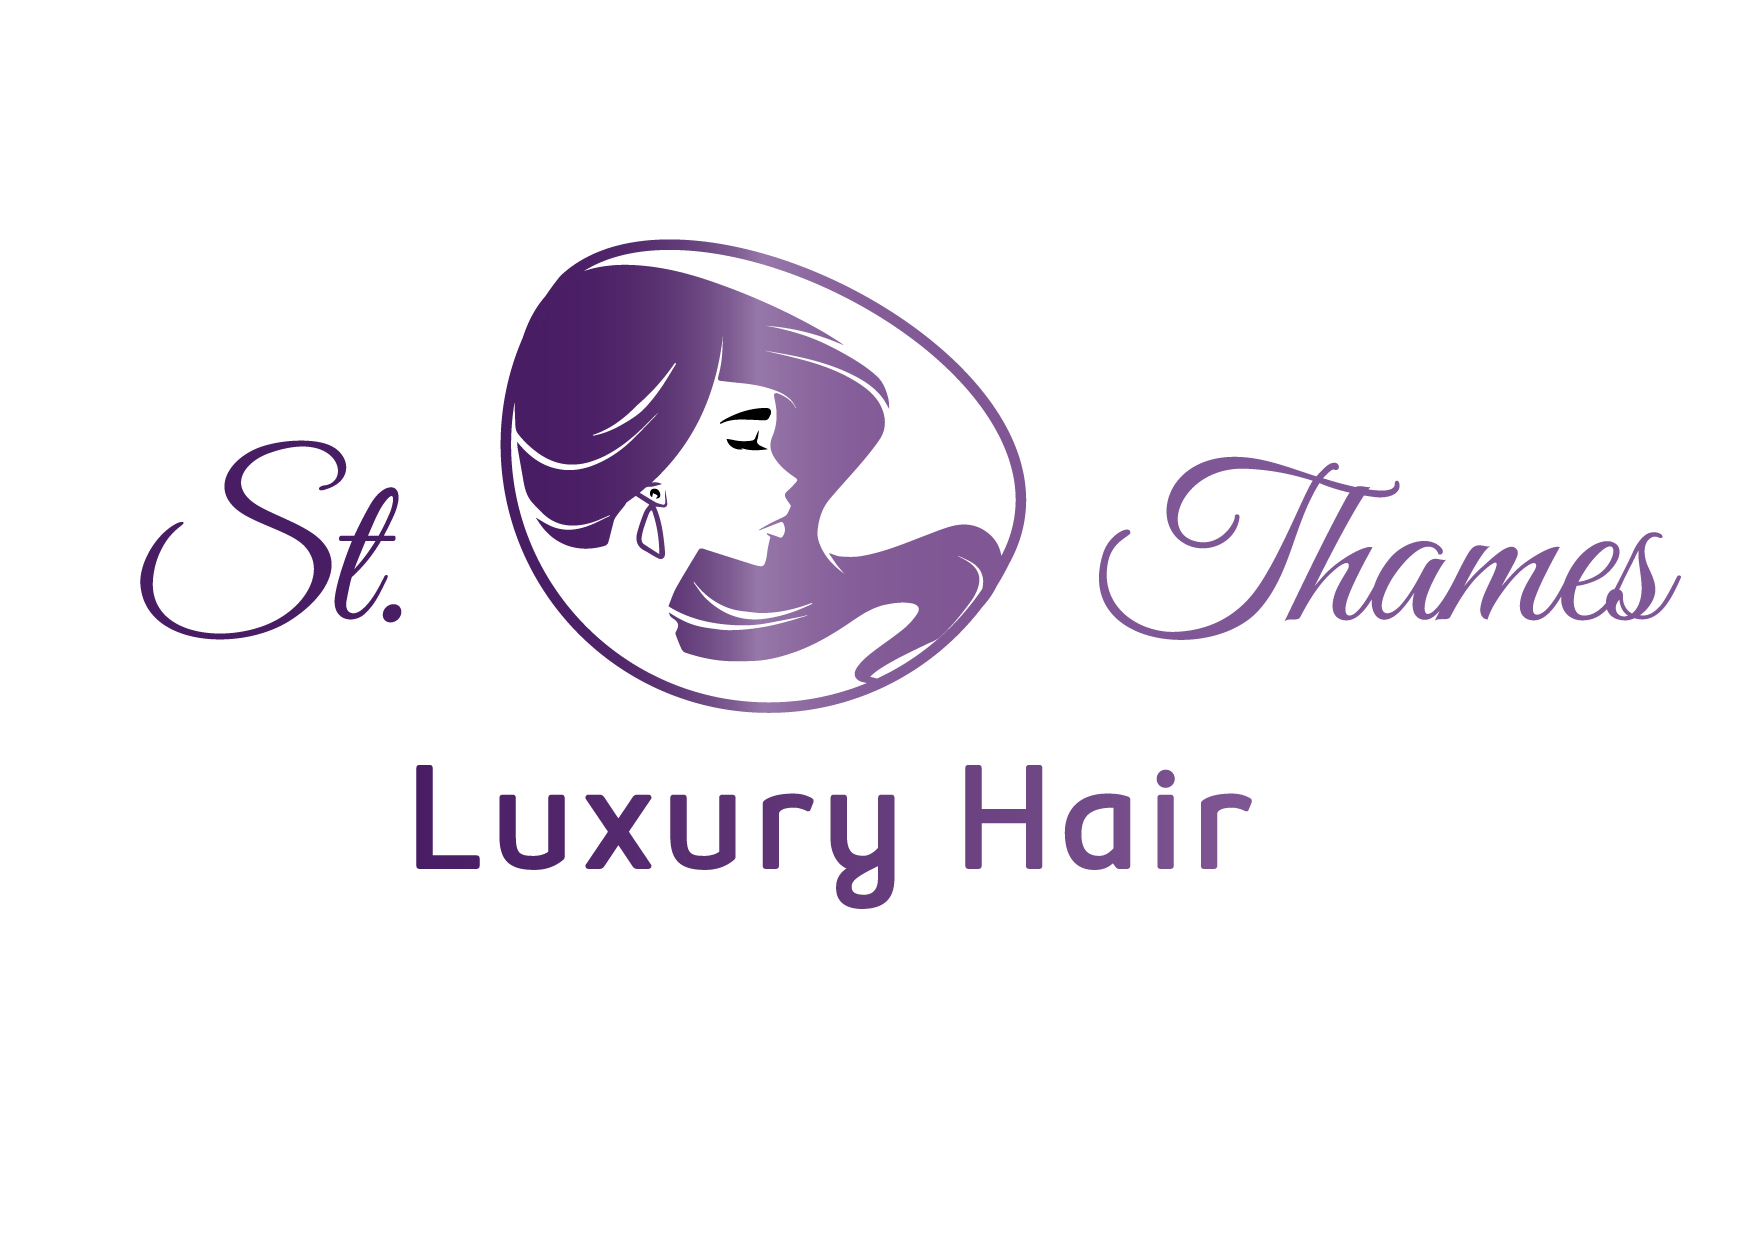 St Thames Luxury Hair Logo Design | Spartanmedia.com.ng